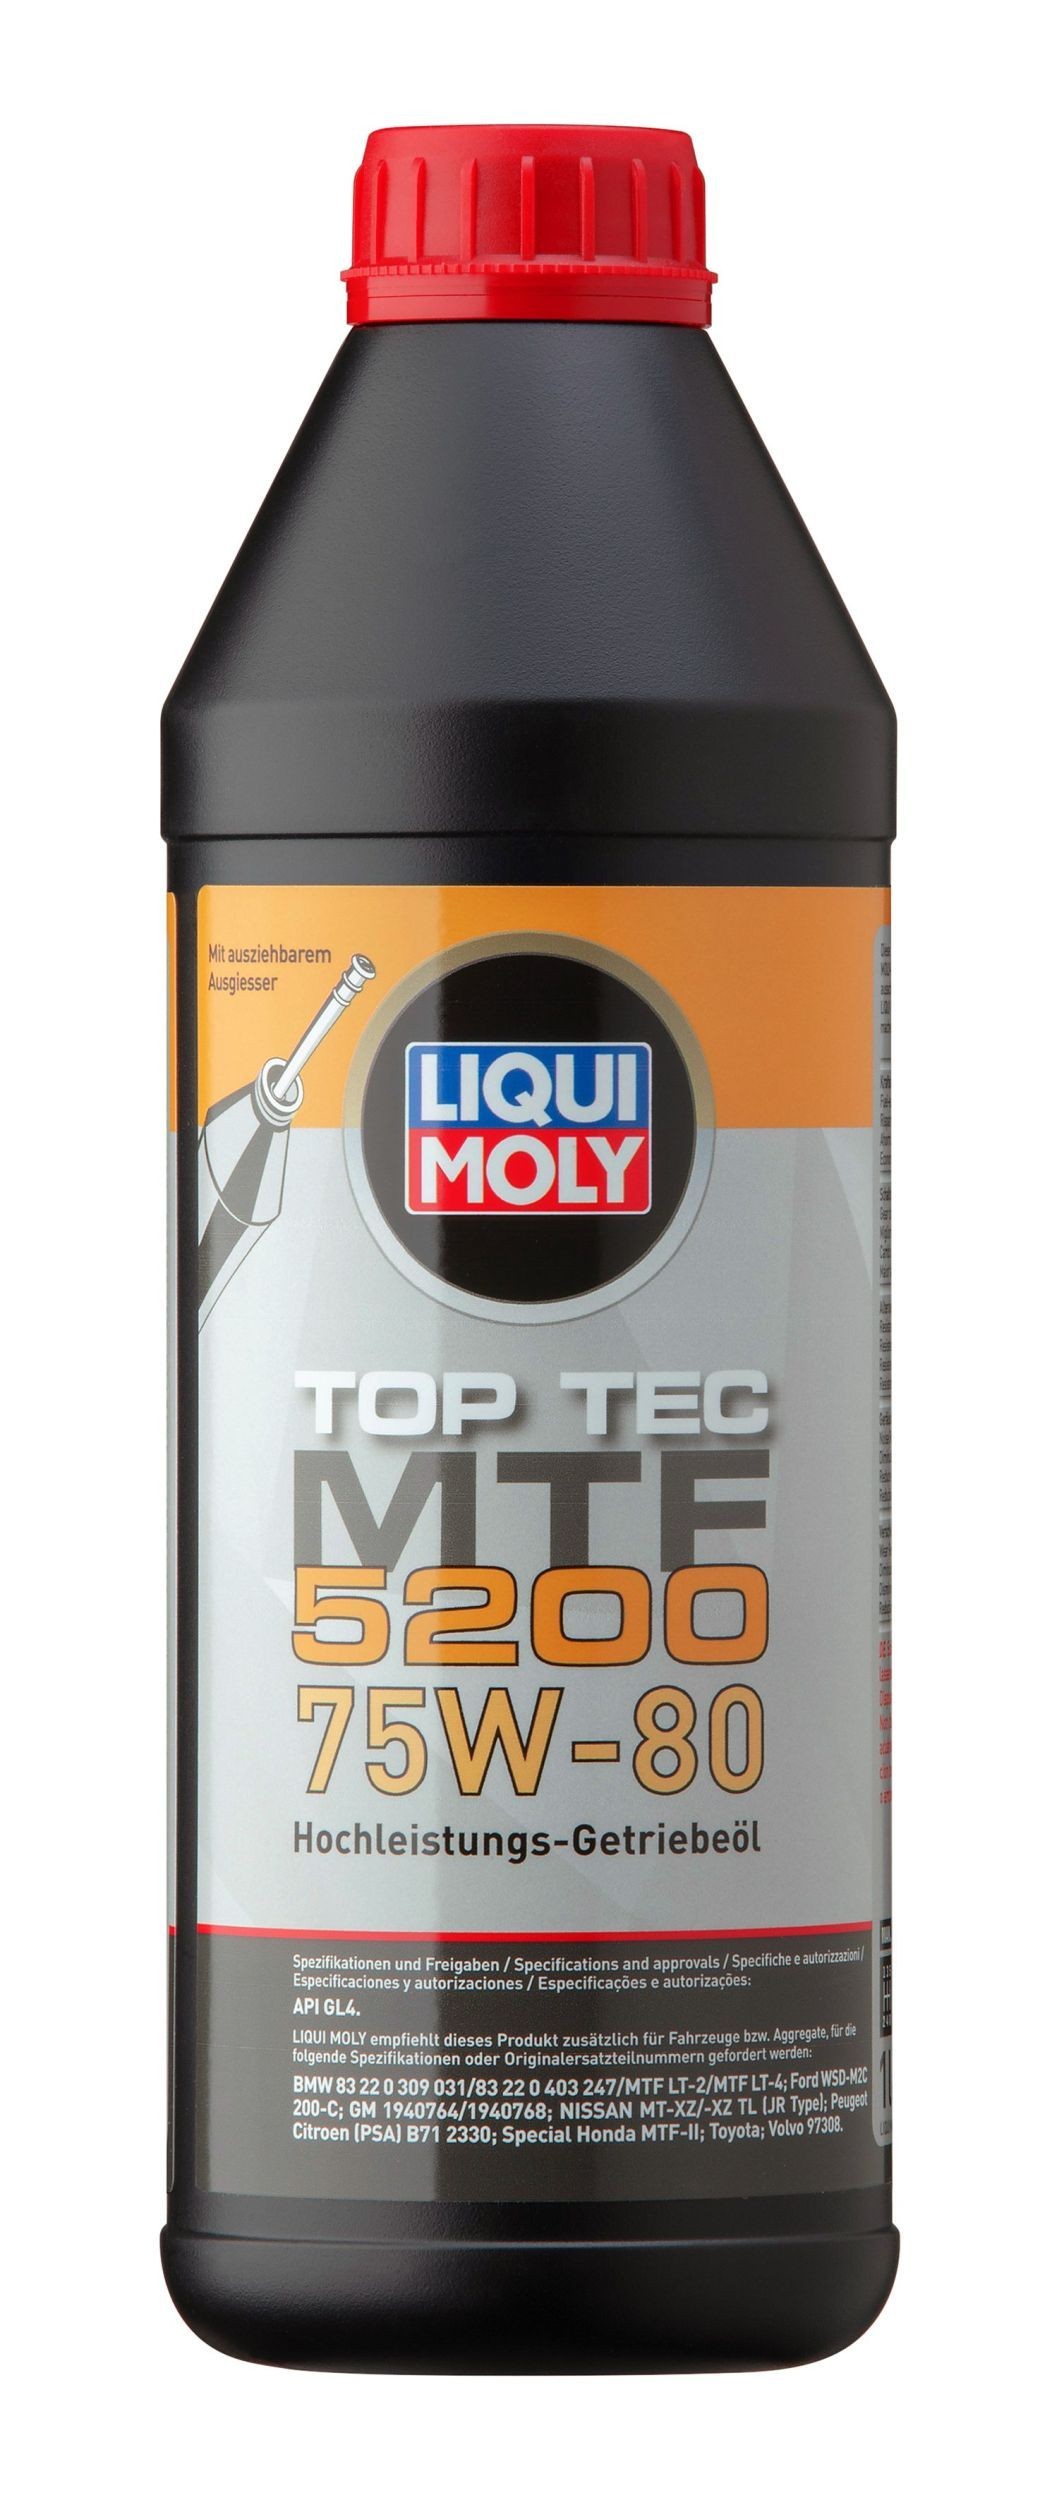 LIQUI MOLY Top Tec, MTF 5200 20845 BEELINE Getriebeöl Motorrad zum günstigen Preis